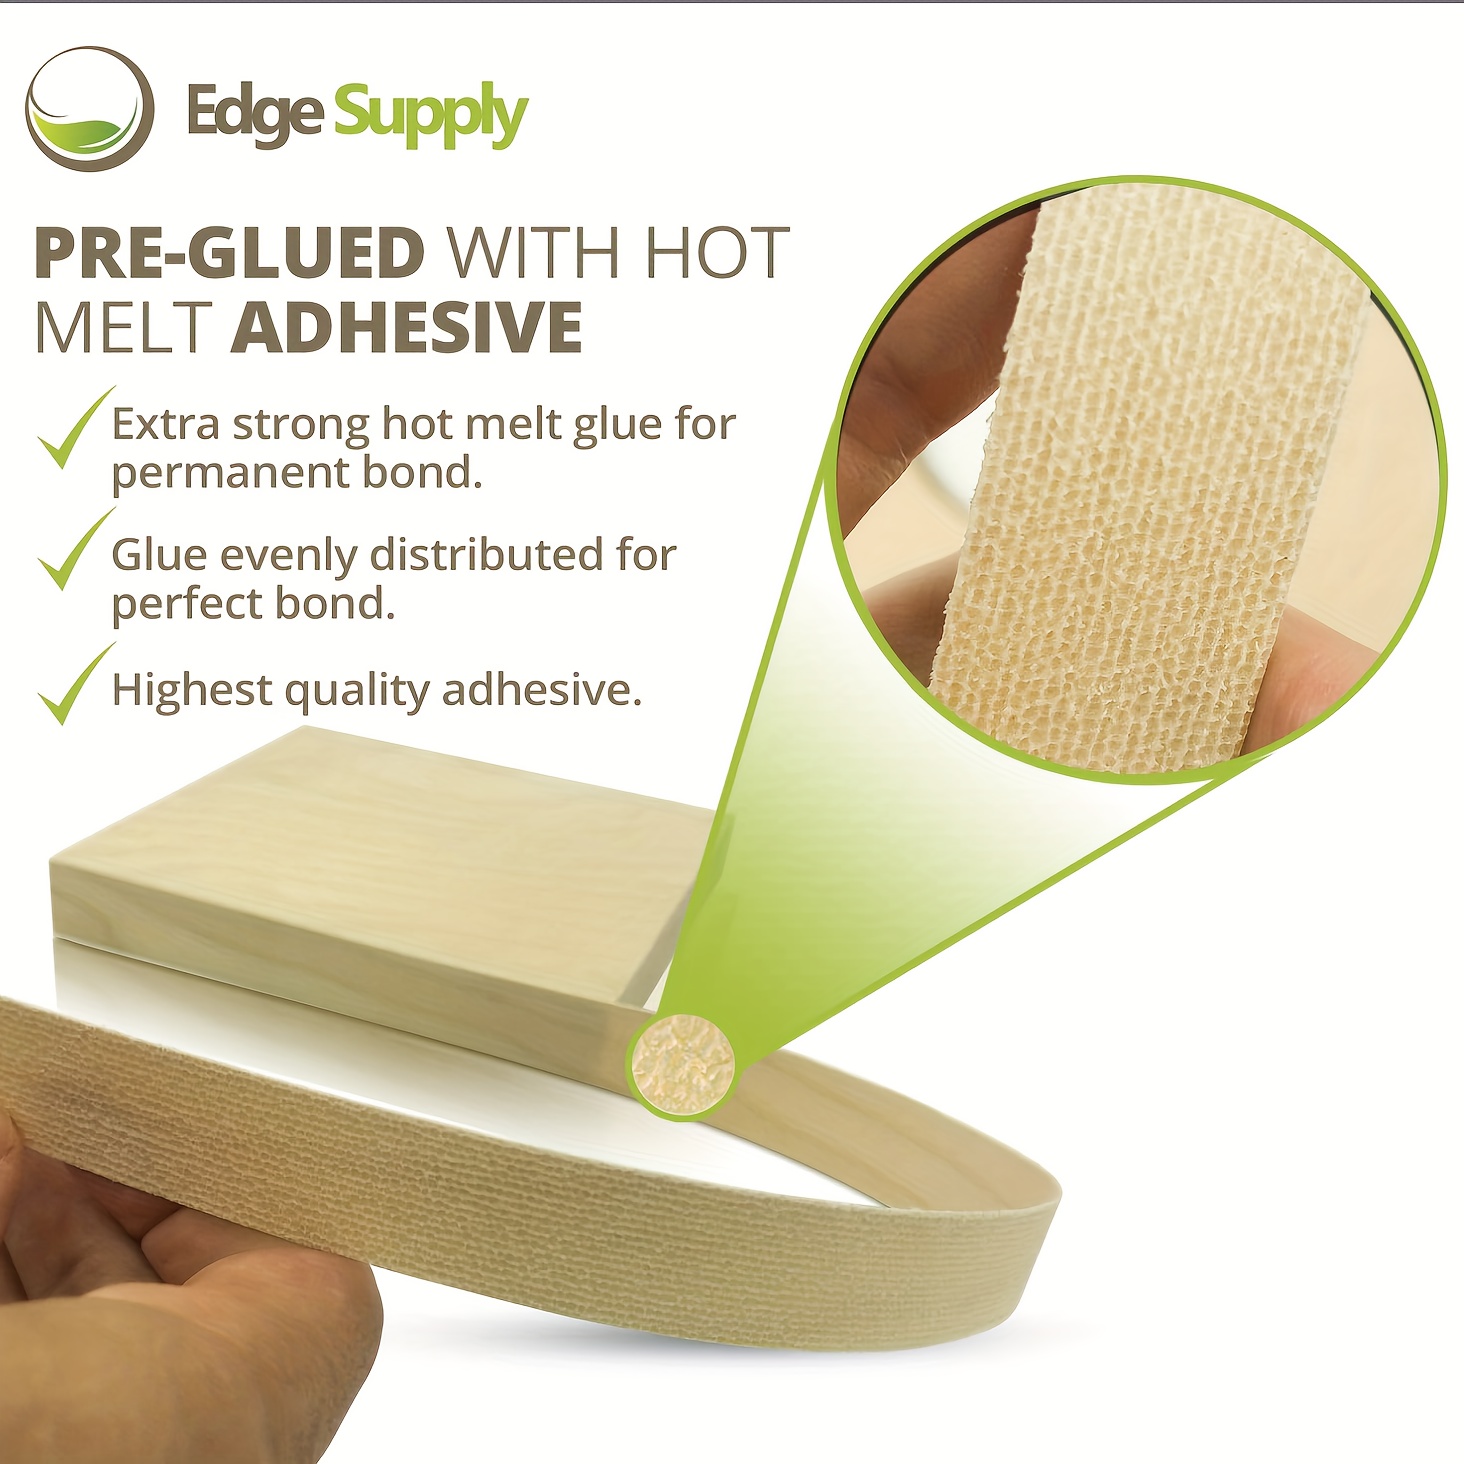 Edge Supply Brand Cherry 1 x 25' Roll Preglued, Wood Veneer Edge Banding, Flexible Wood Tape, Easy Application Iron on with Hot Melt Adhesive.